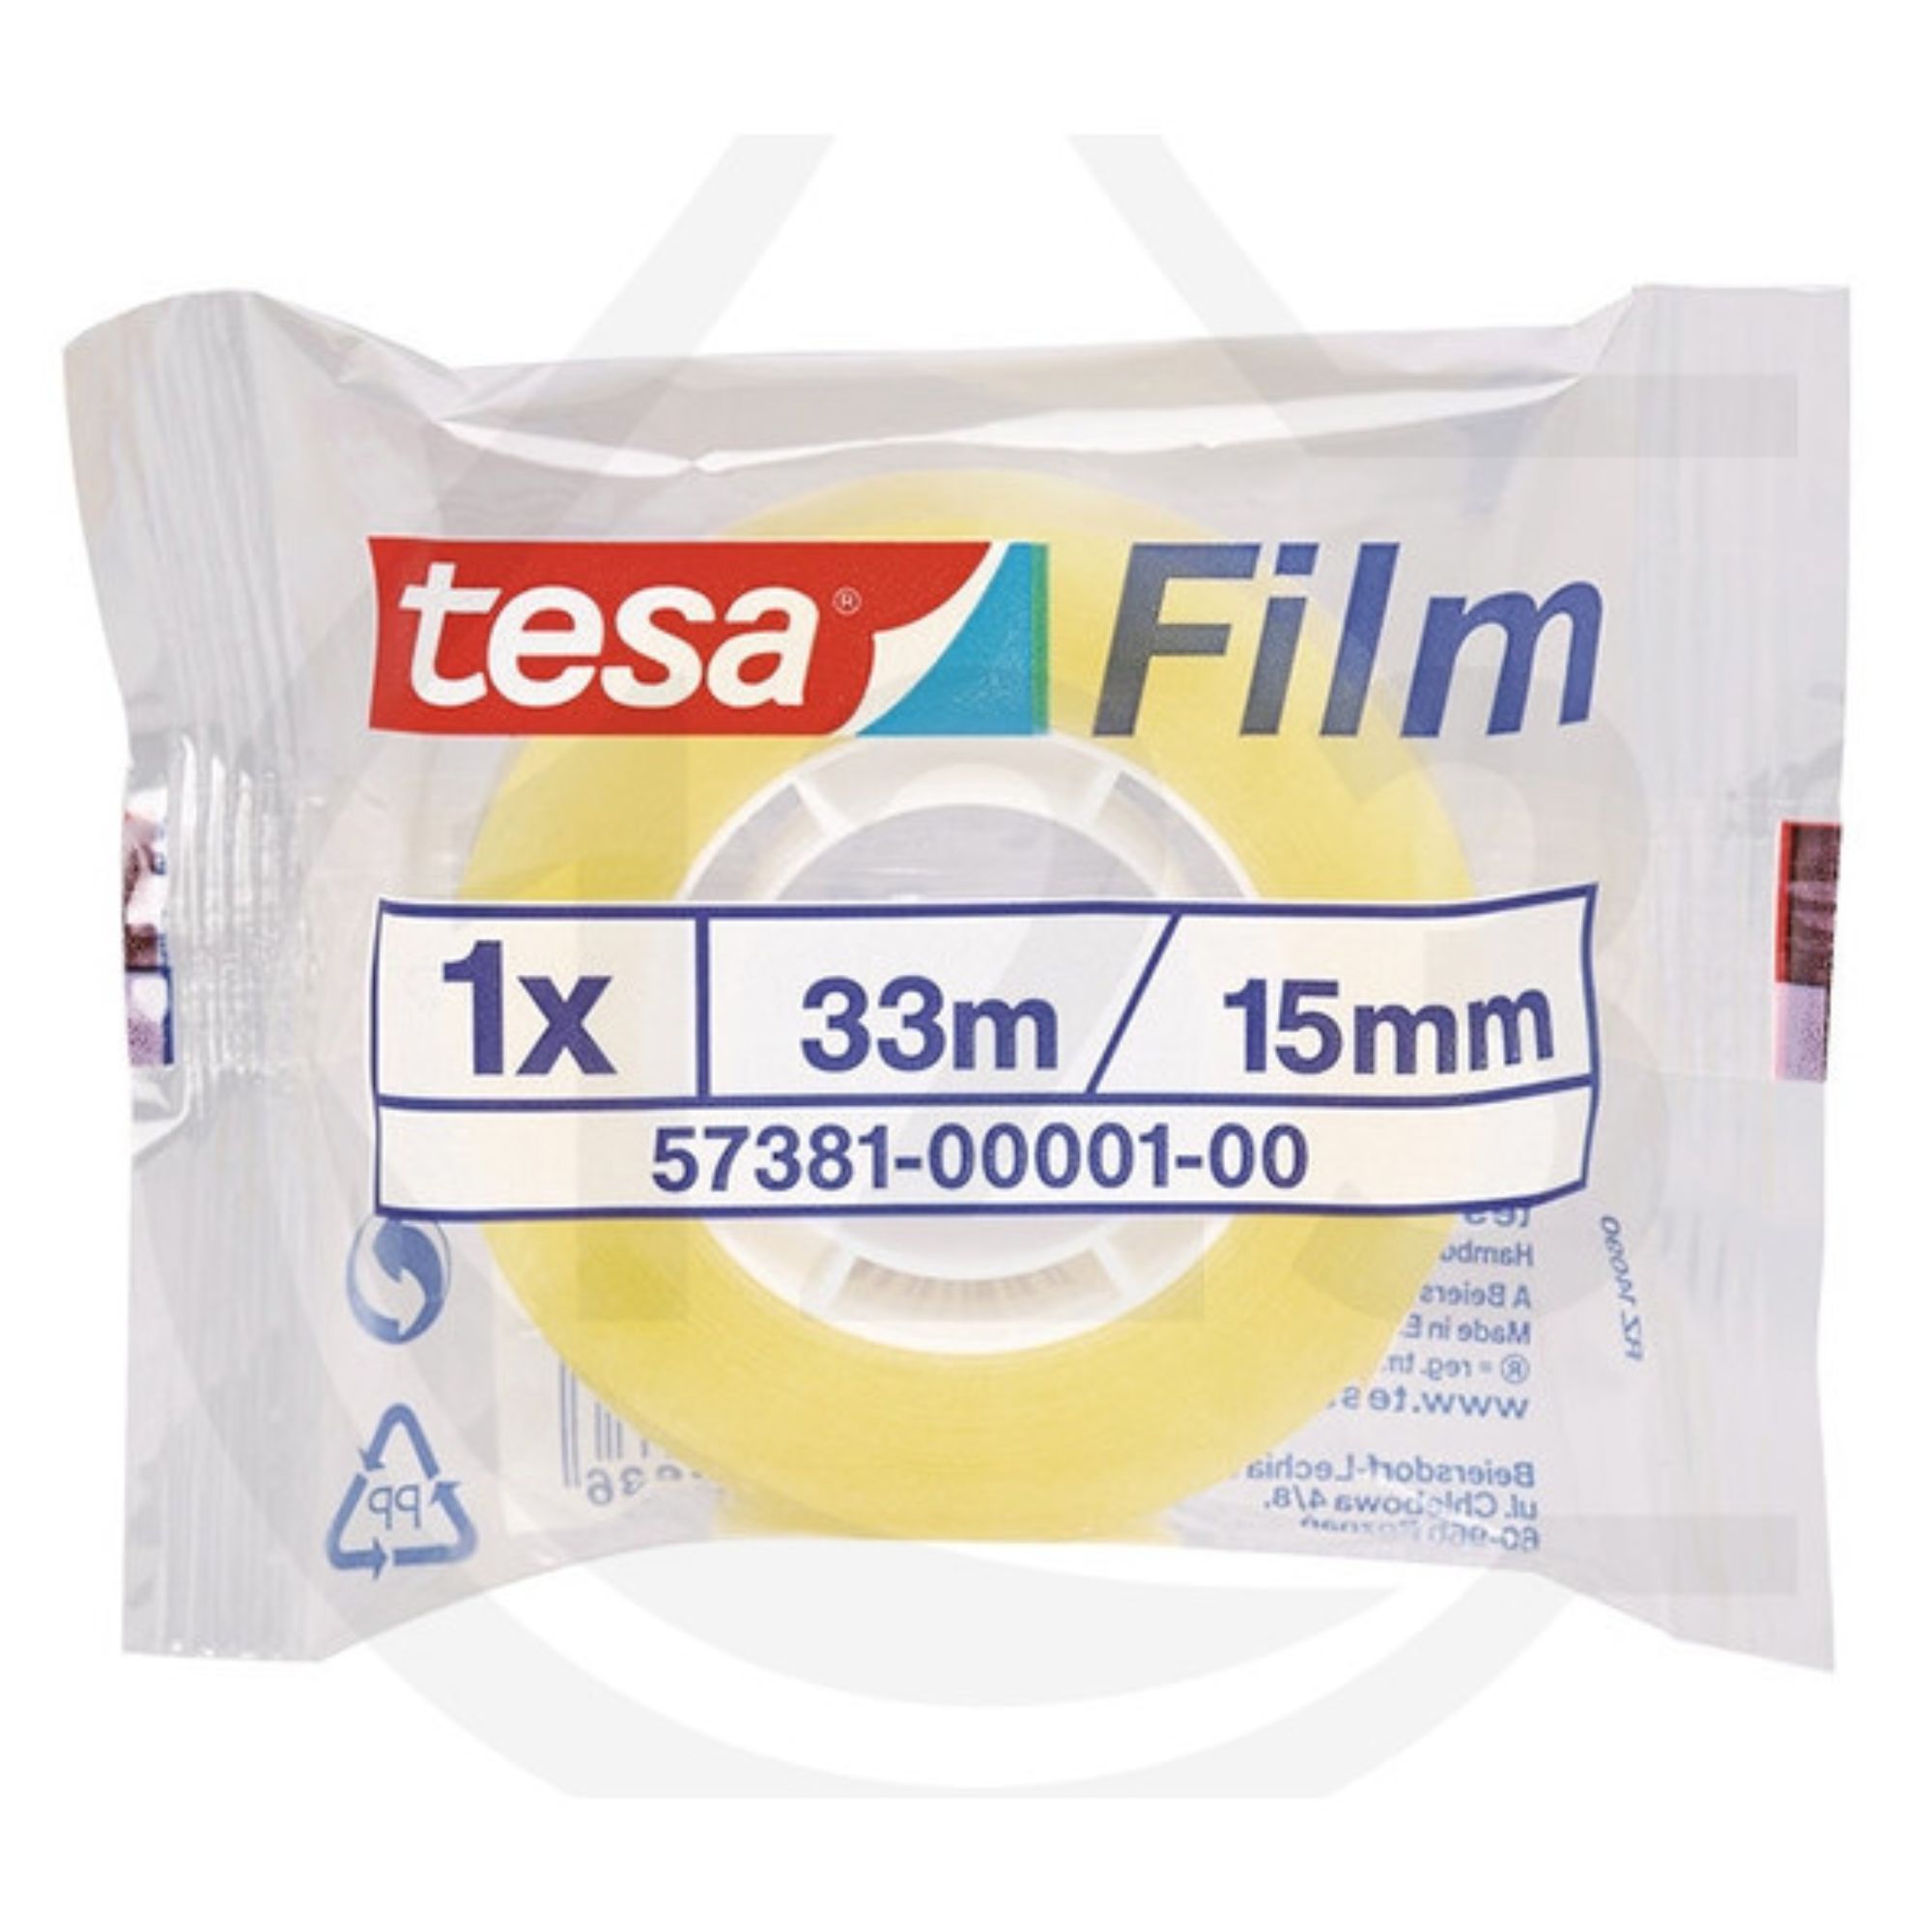 tesafilm standard rolo c/ 33mx15mm, em caixa expositora